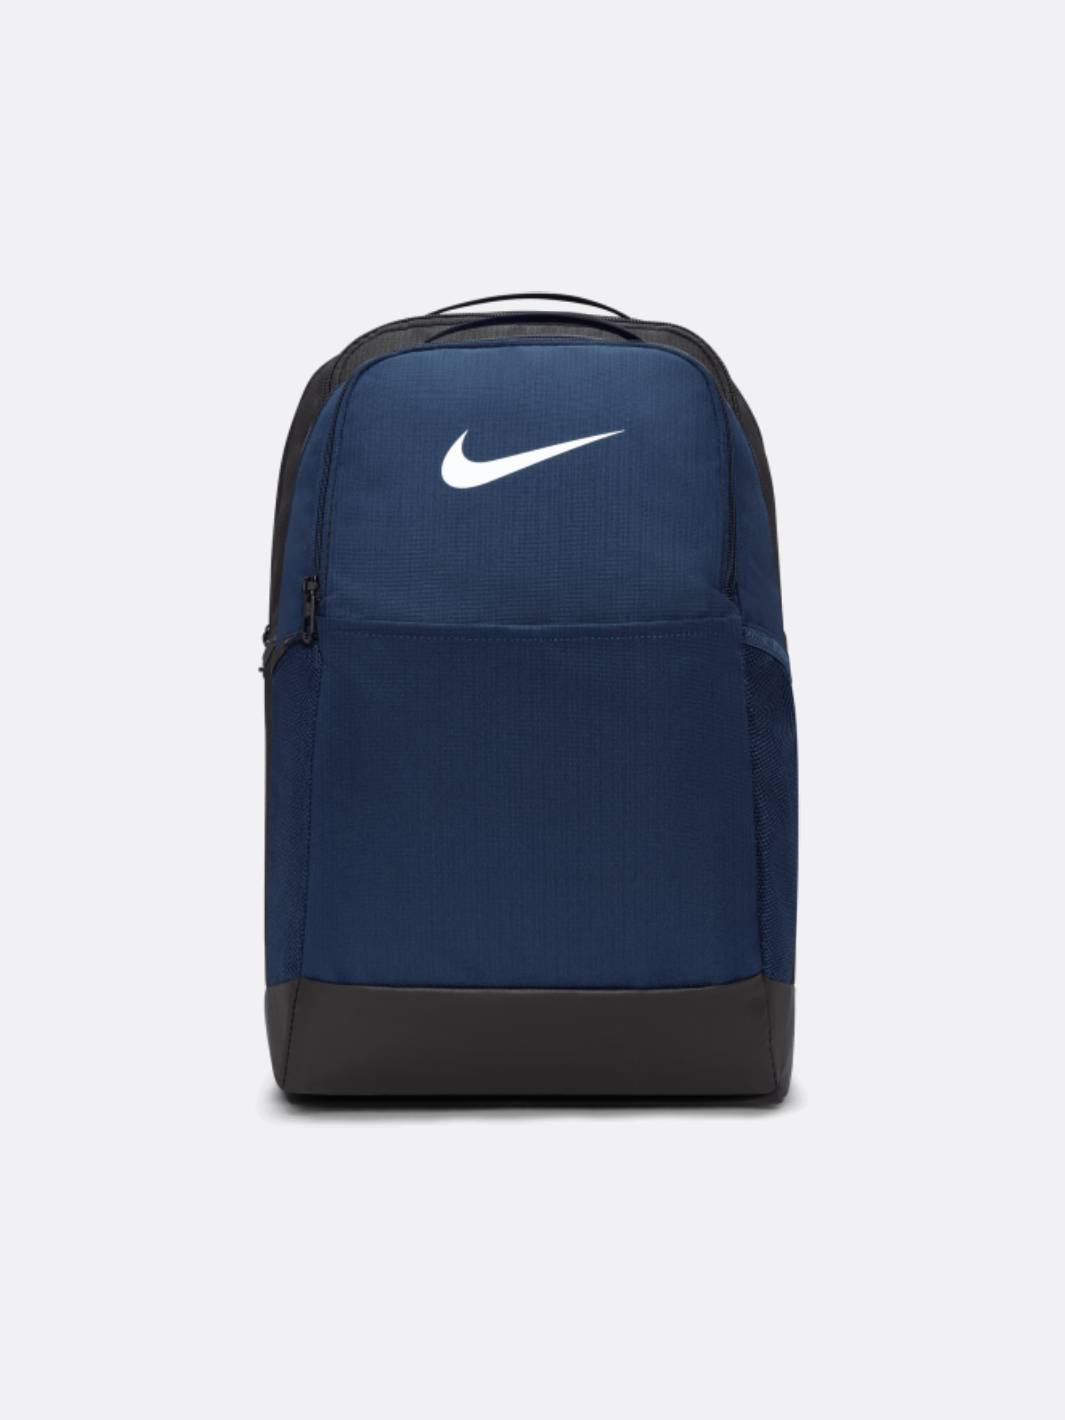 Nike Brasilia (Large) Training Duffel Bag - Atlantic Sportswear